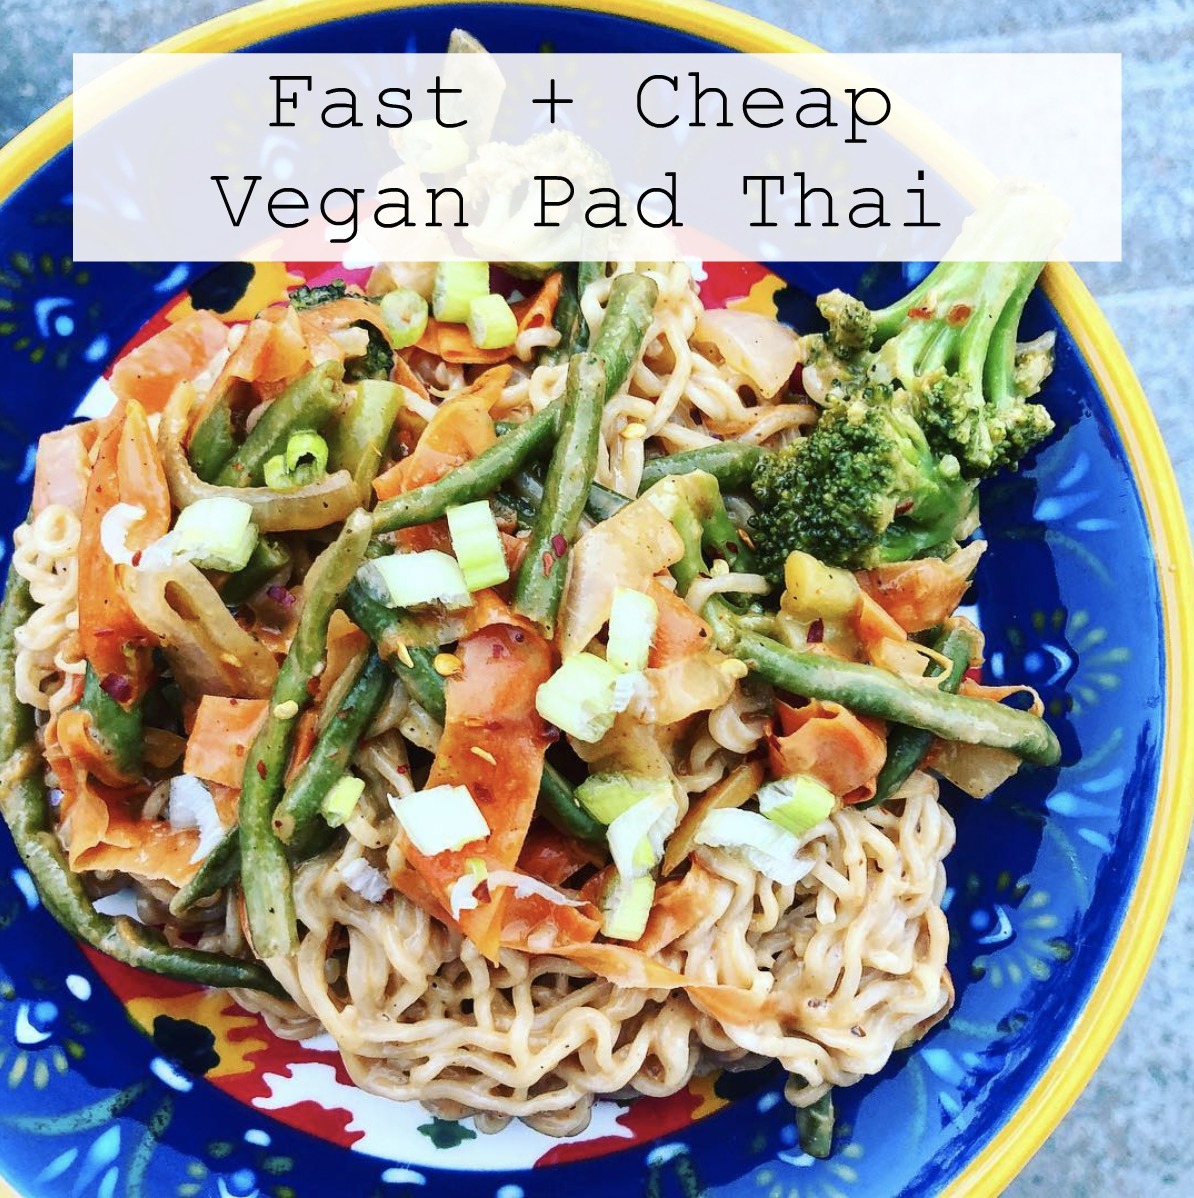 Fast + Cheap Vegan Pad Thai